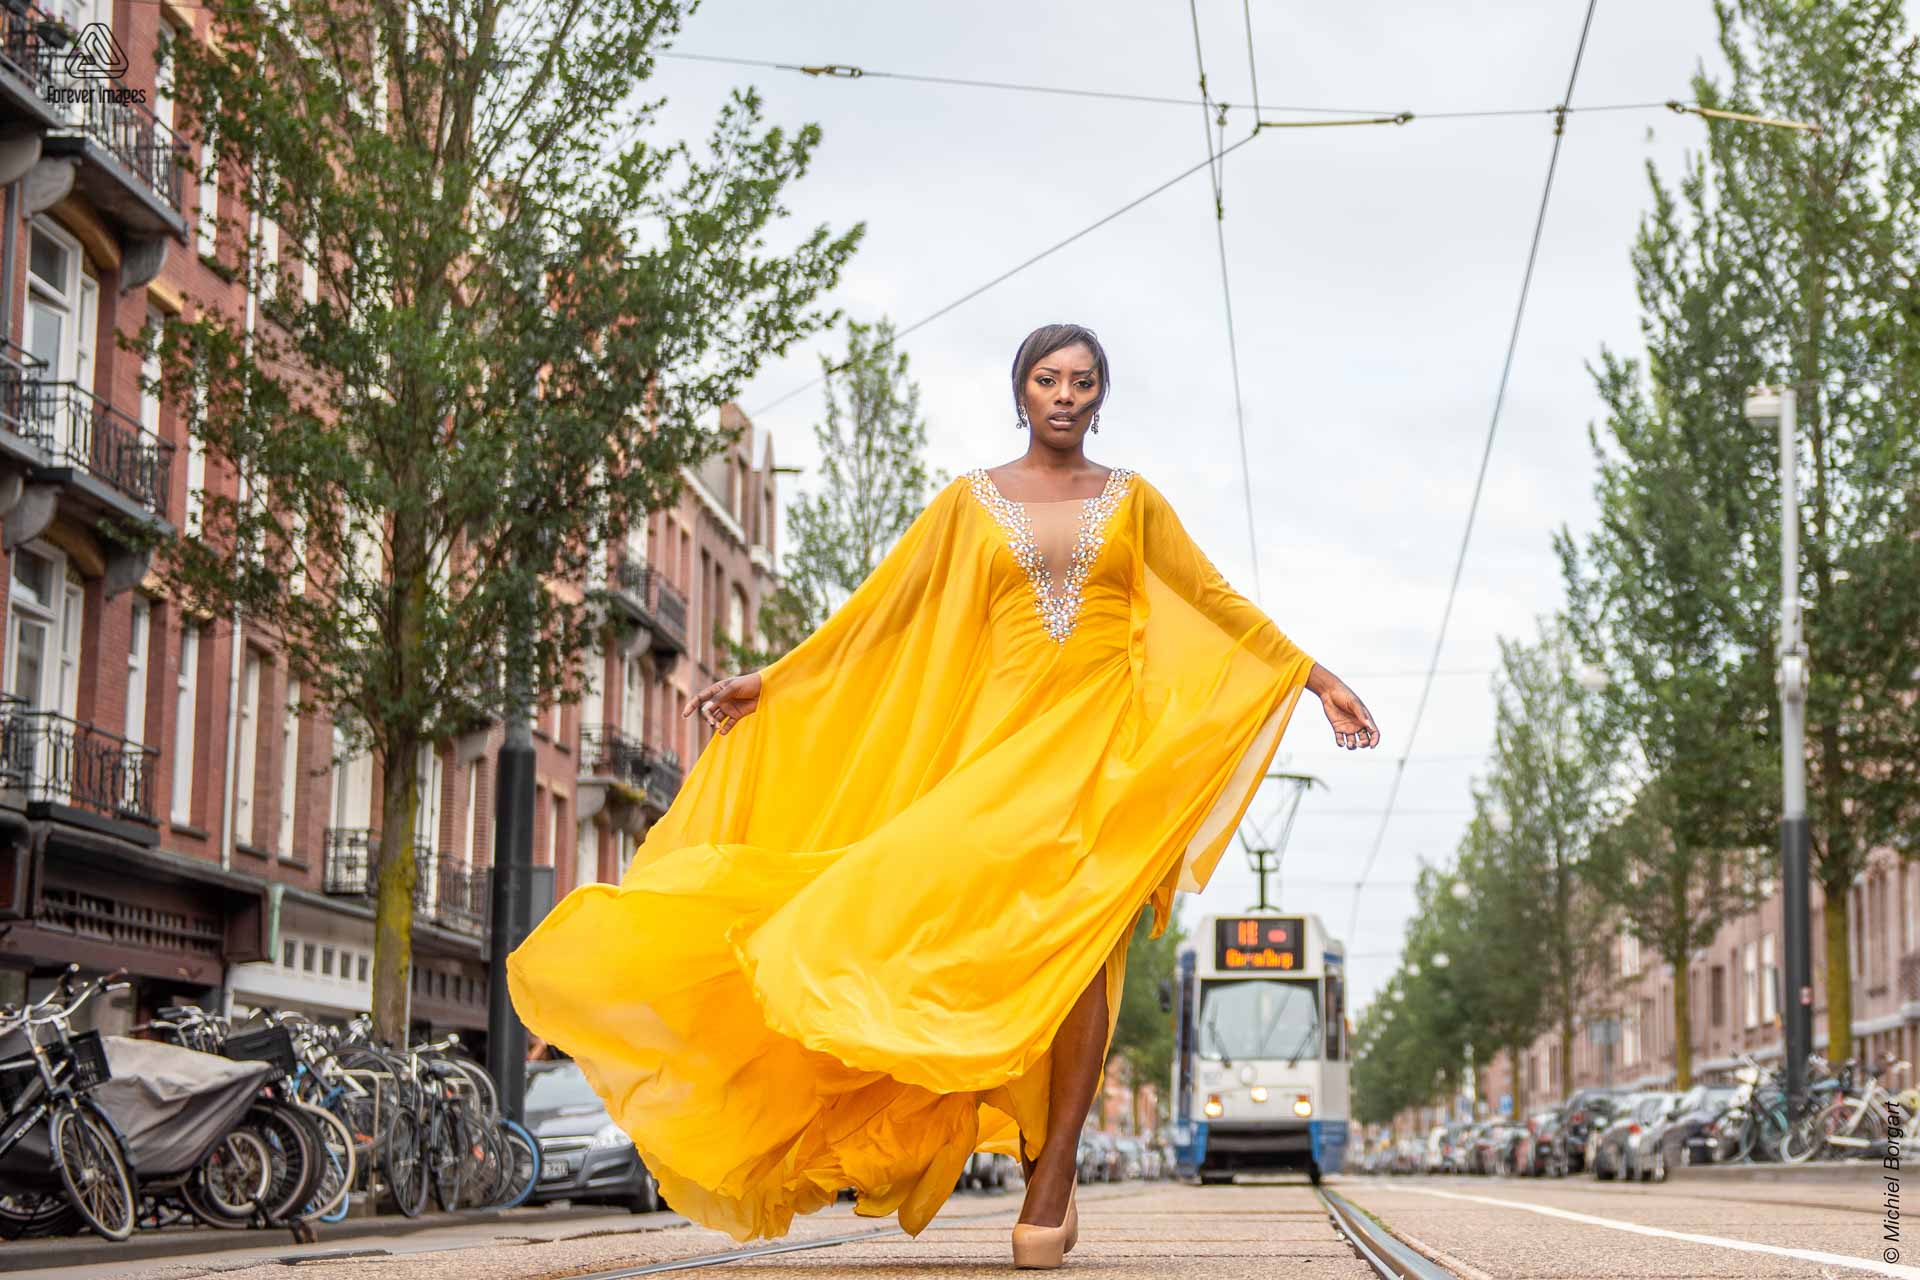 Fashionfoto urben shoot gele jurk tram Amsterdam | Mariana Pietersz David Cardenas Miss Avantgarde | Fashionfotograaf Michiel Borgart - Forever Images.